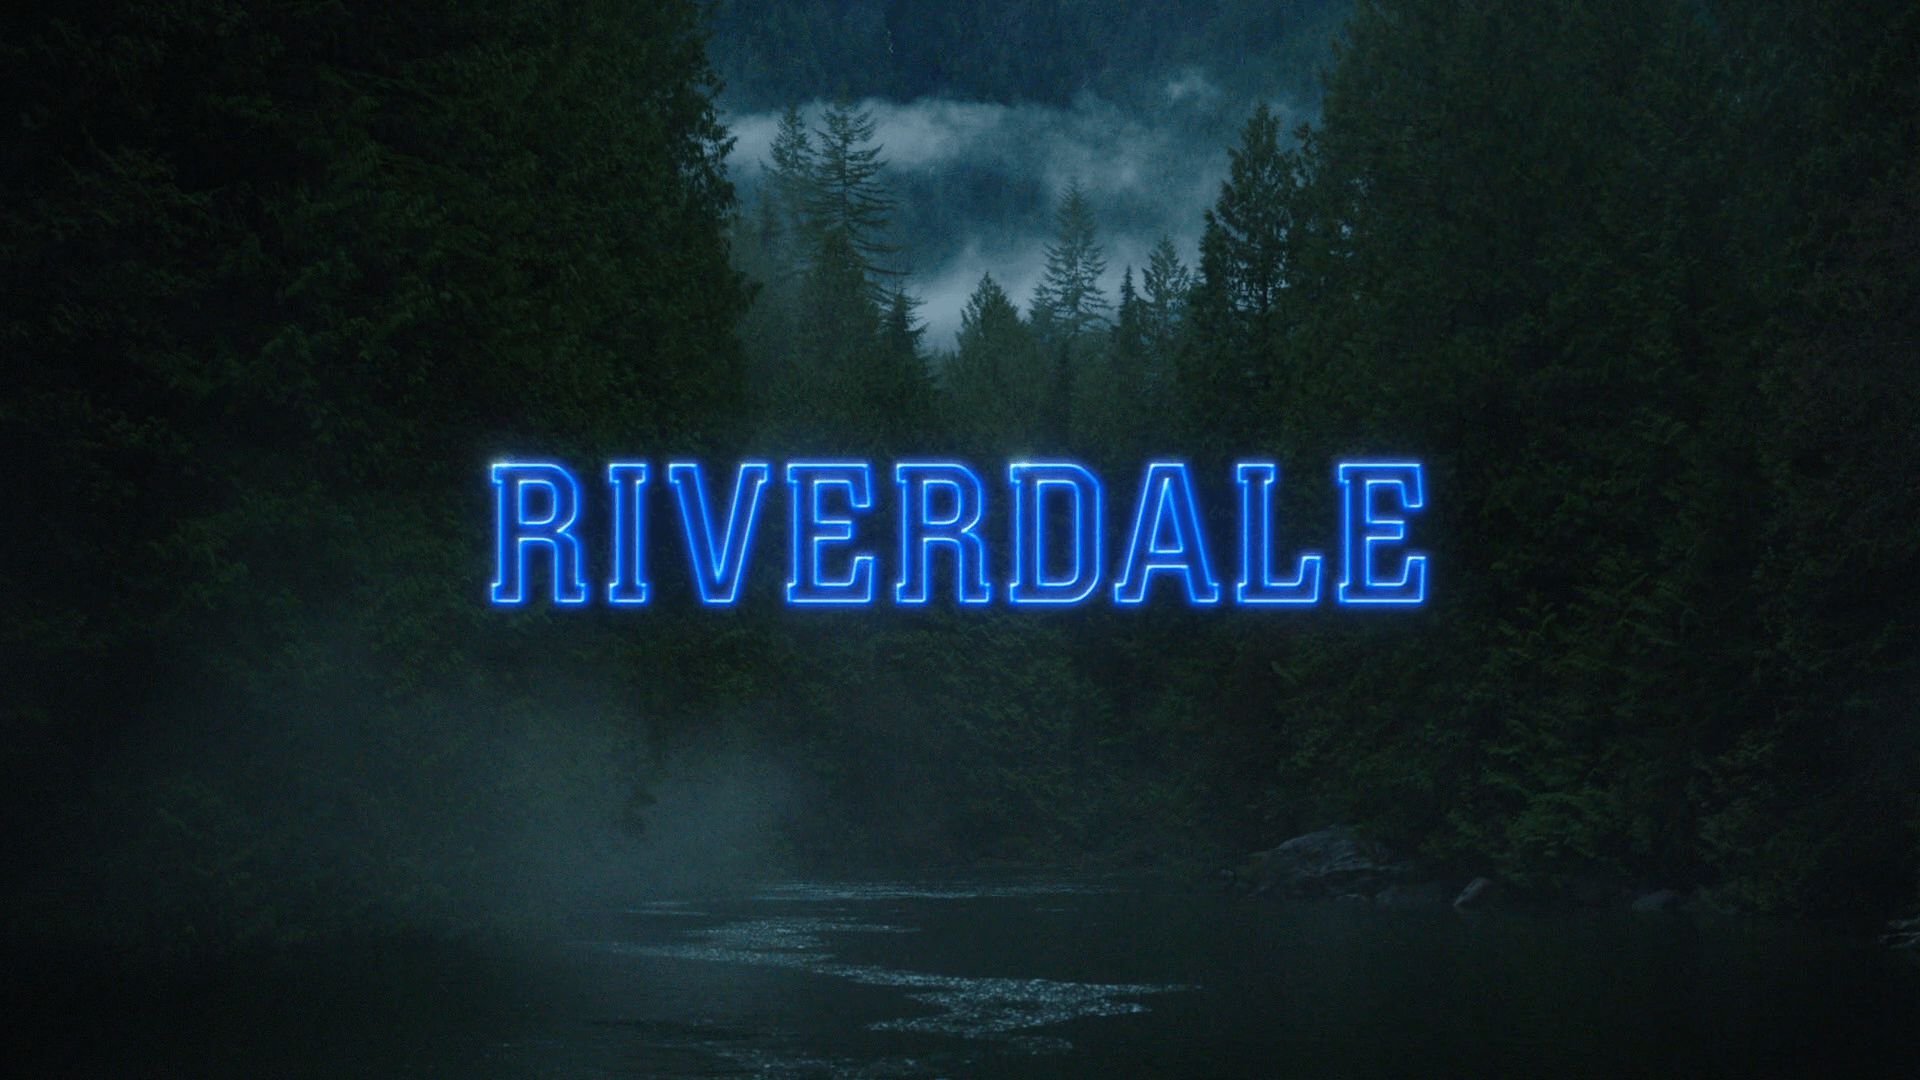 Riverdale Tumblr PC Wallpapers - Wallpaper Cave